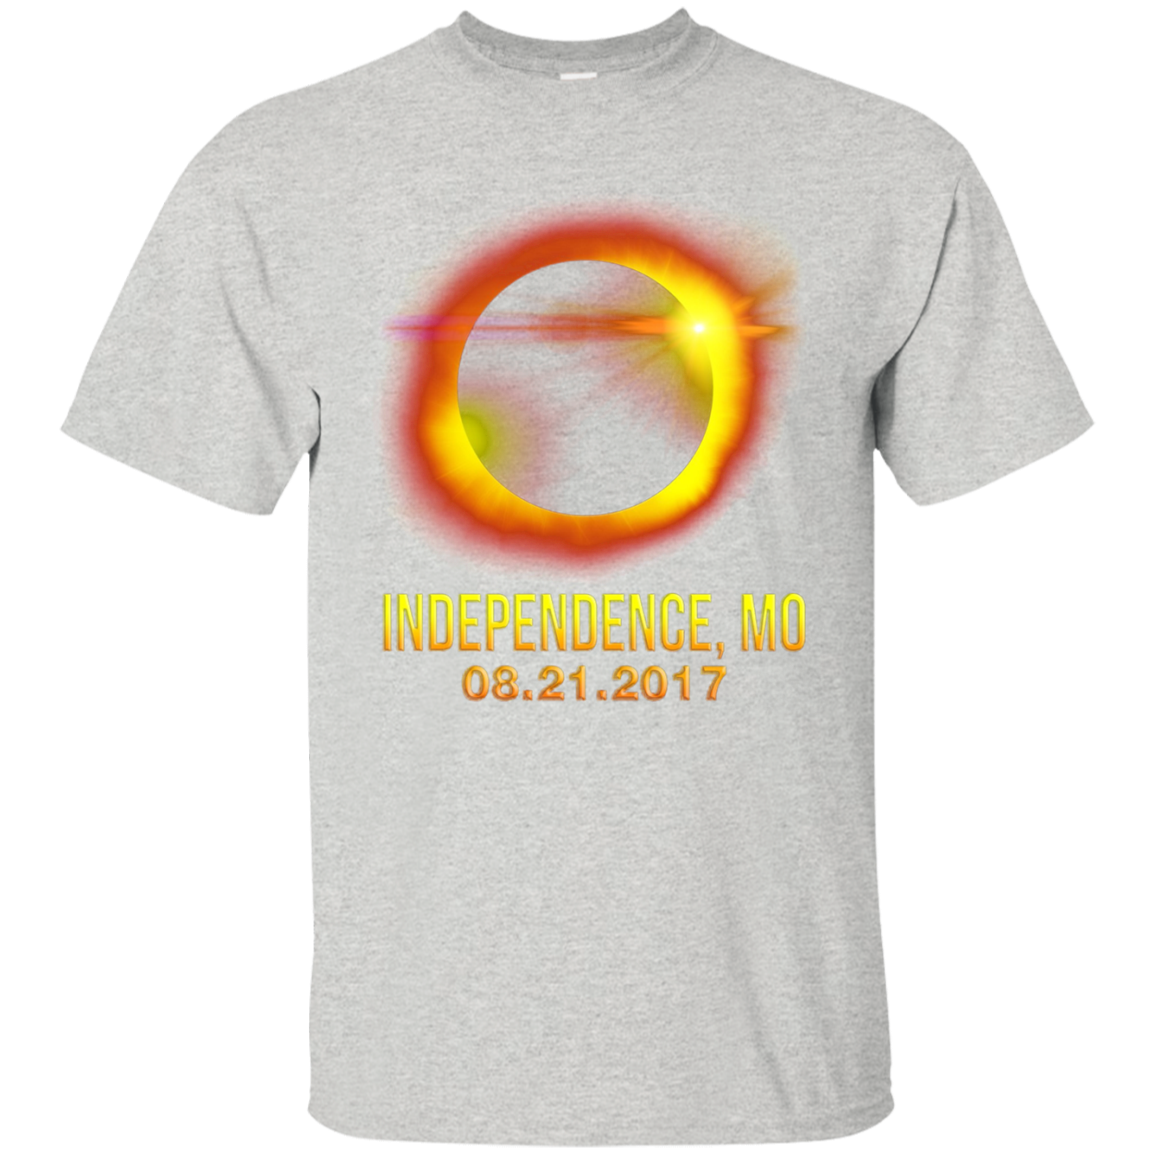 High Quality Independence Missouri Solar Eclipse 08.21.2017 Shirt